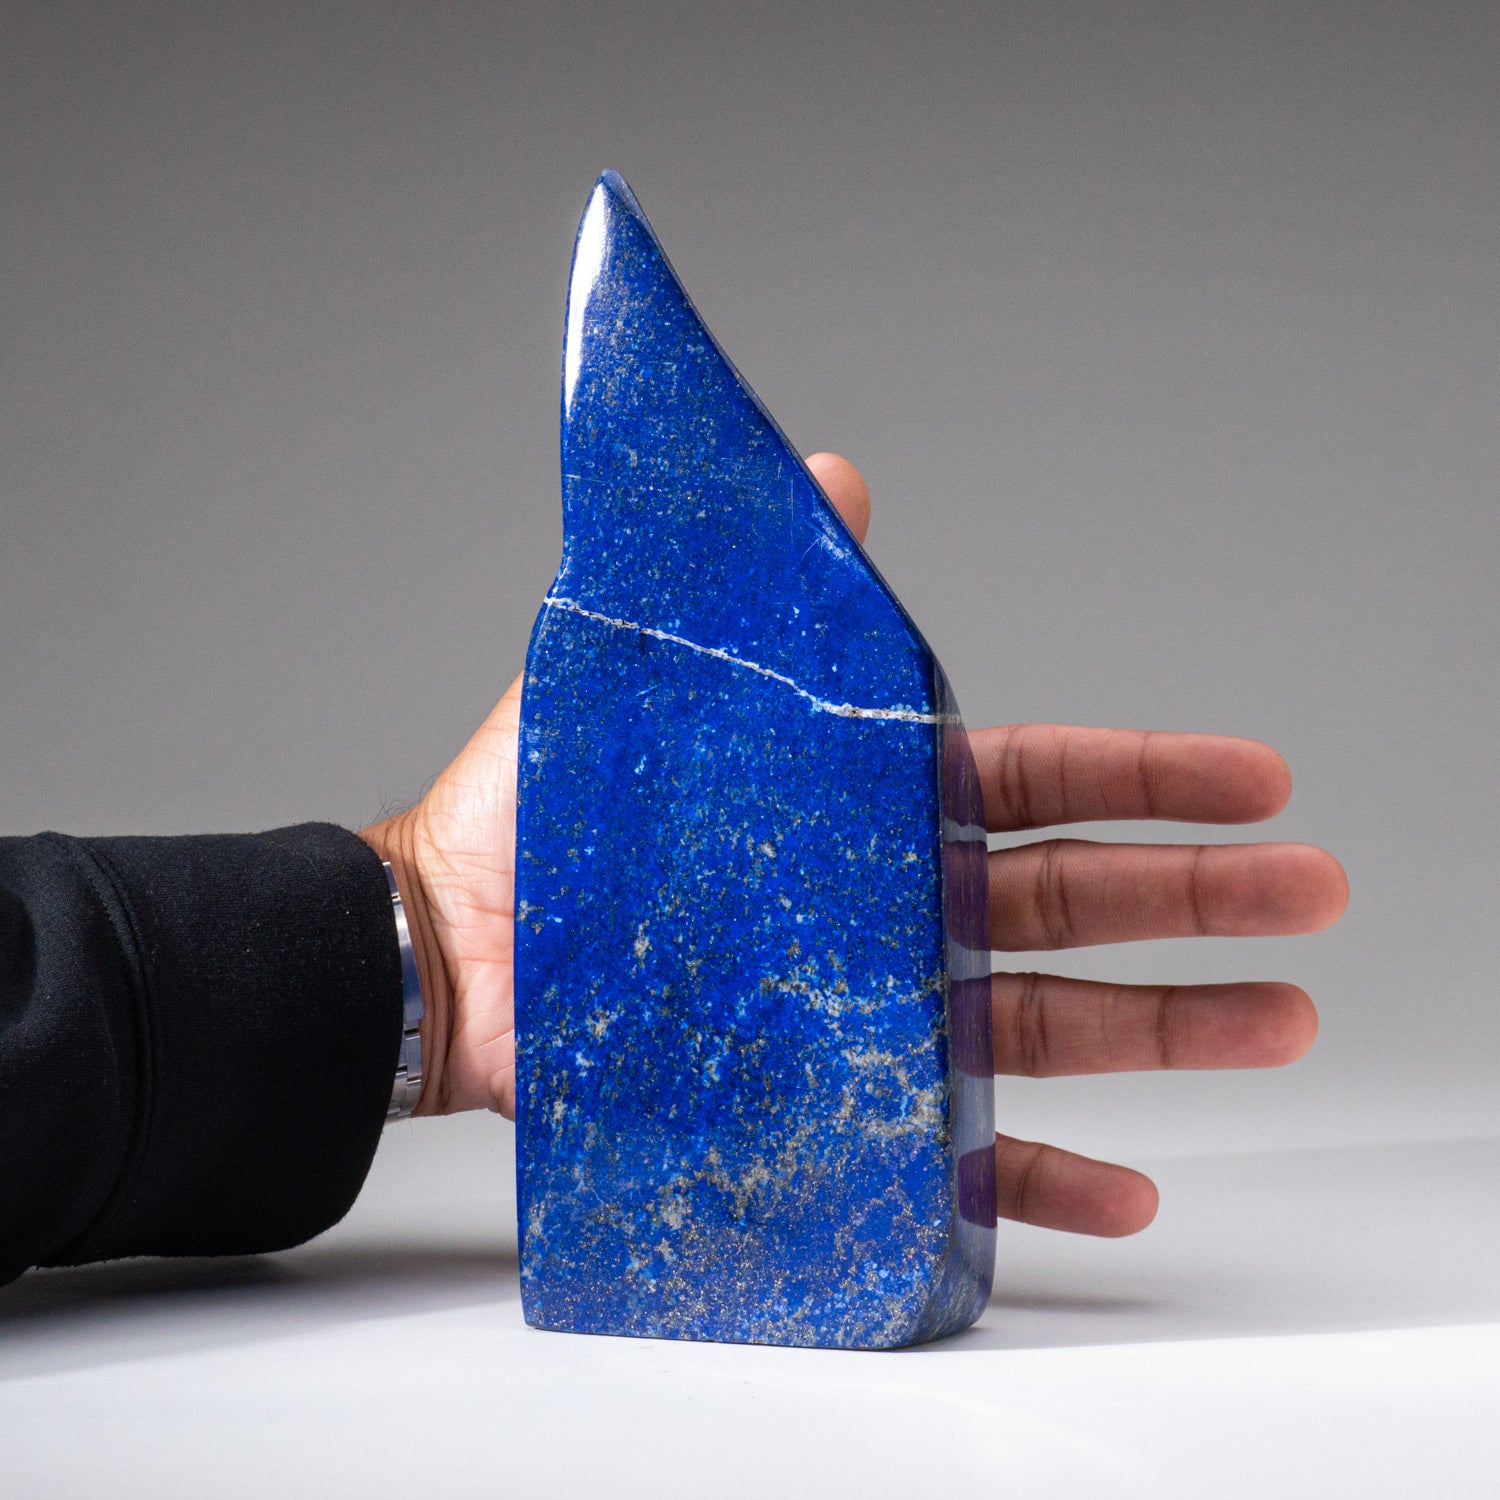 Polished Lapis Lazuli Freeform from Afghanistan (4.7 lbs)